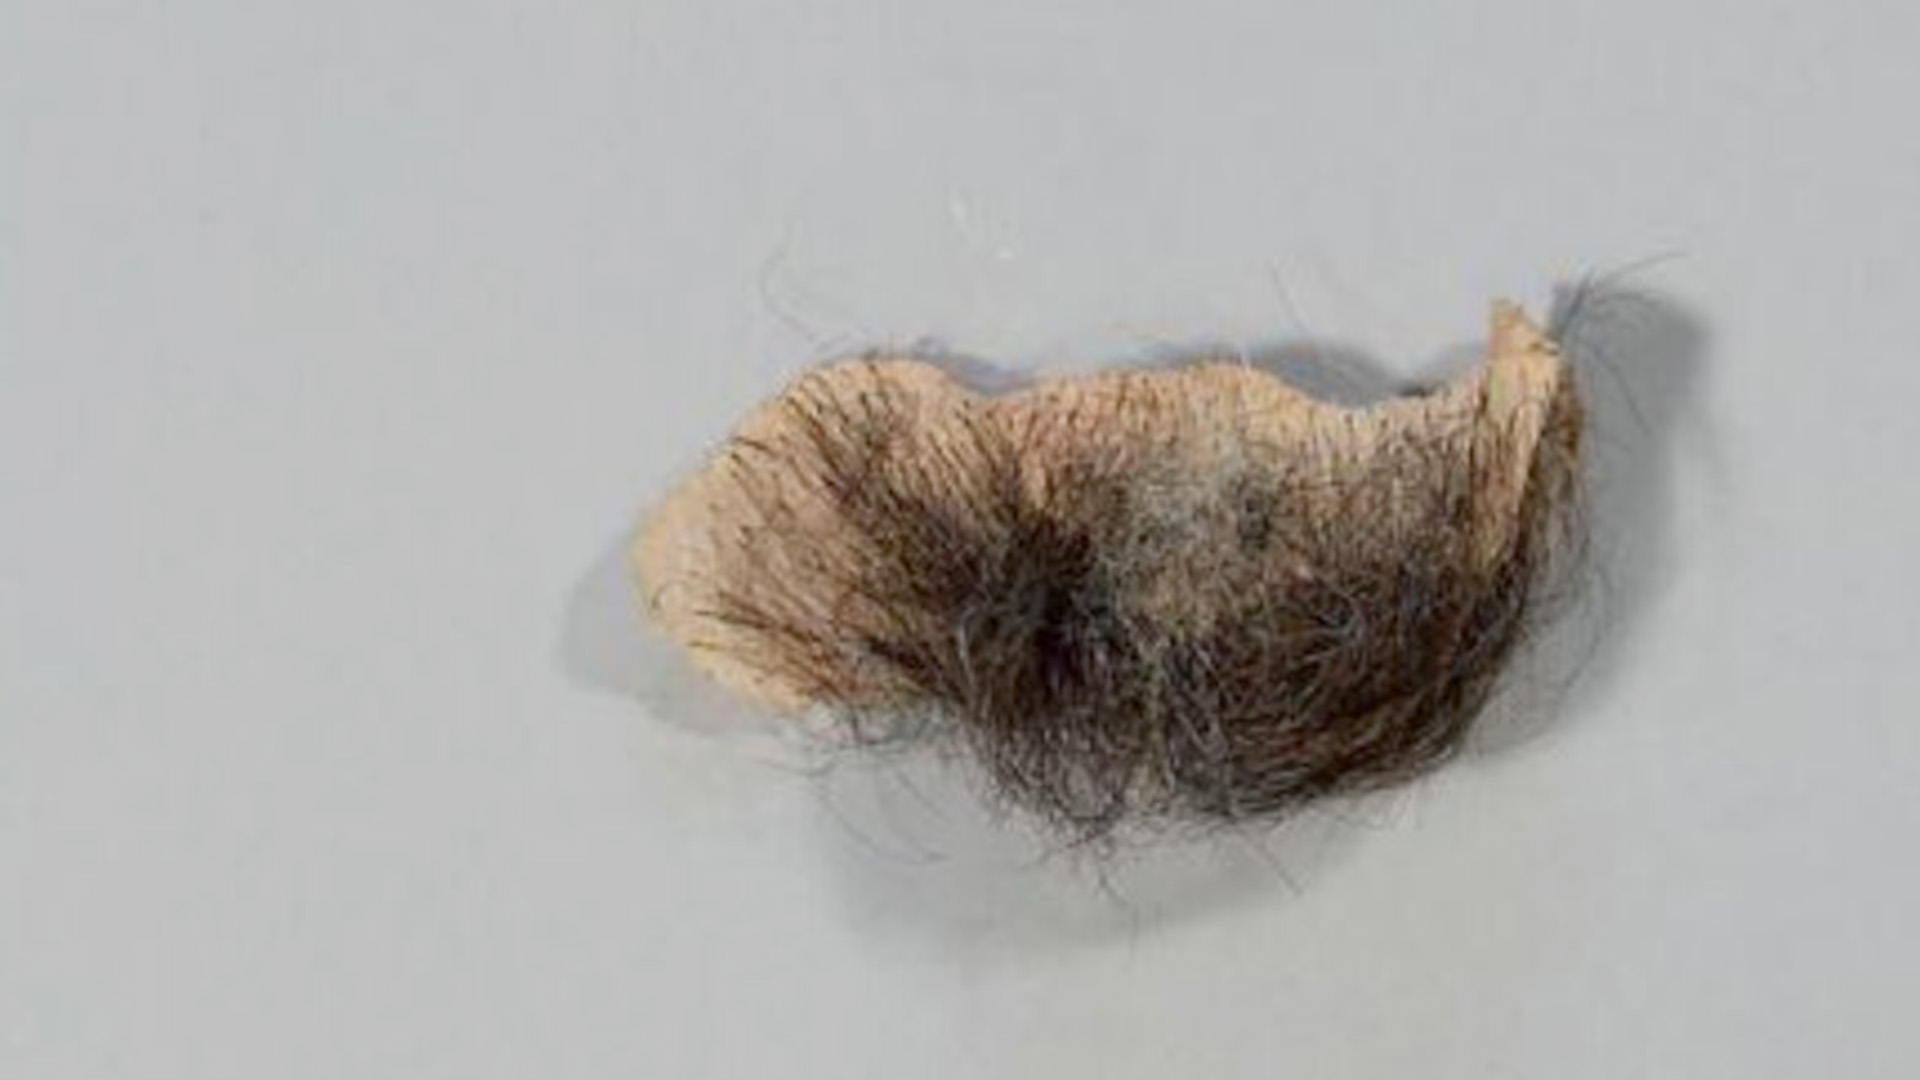 False beard made from human or animal hair